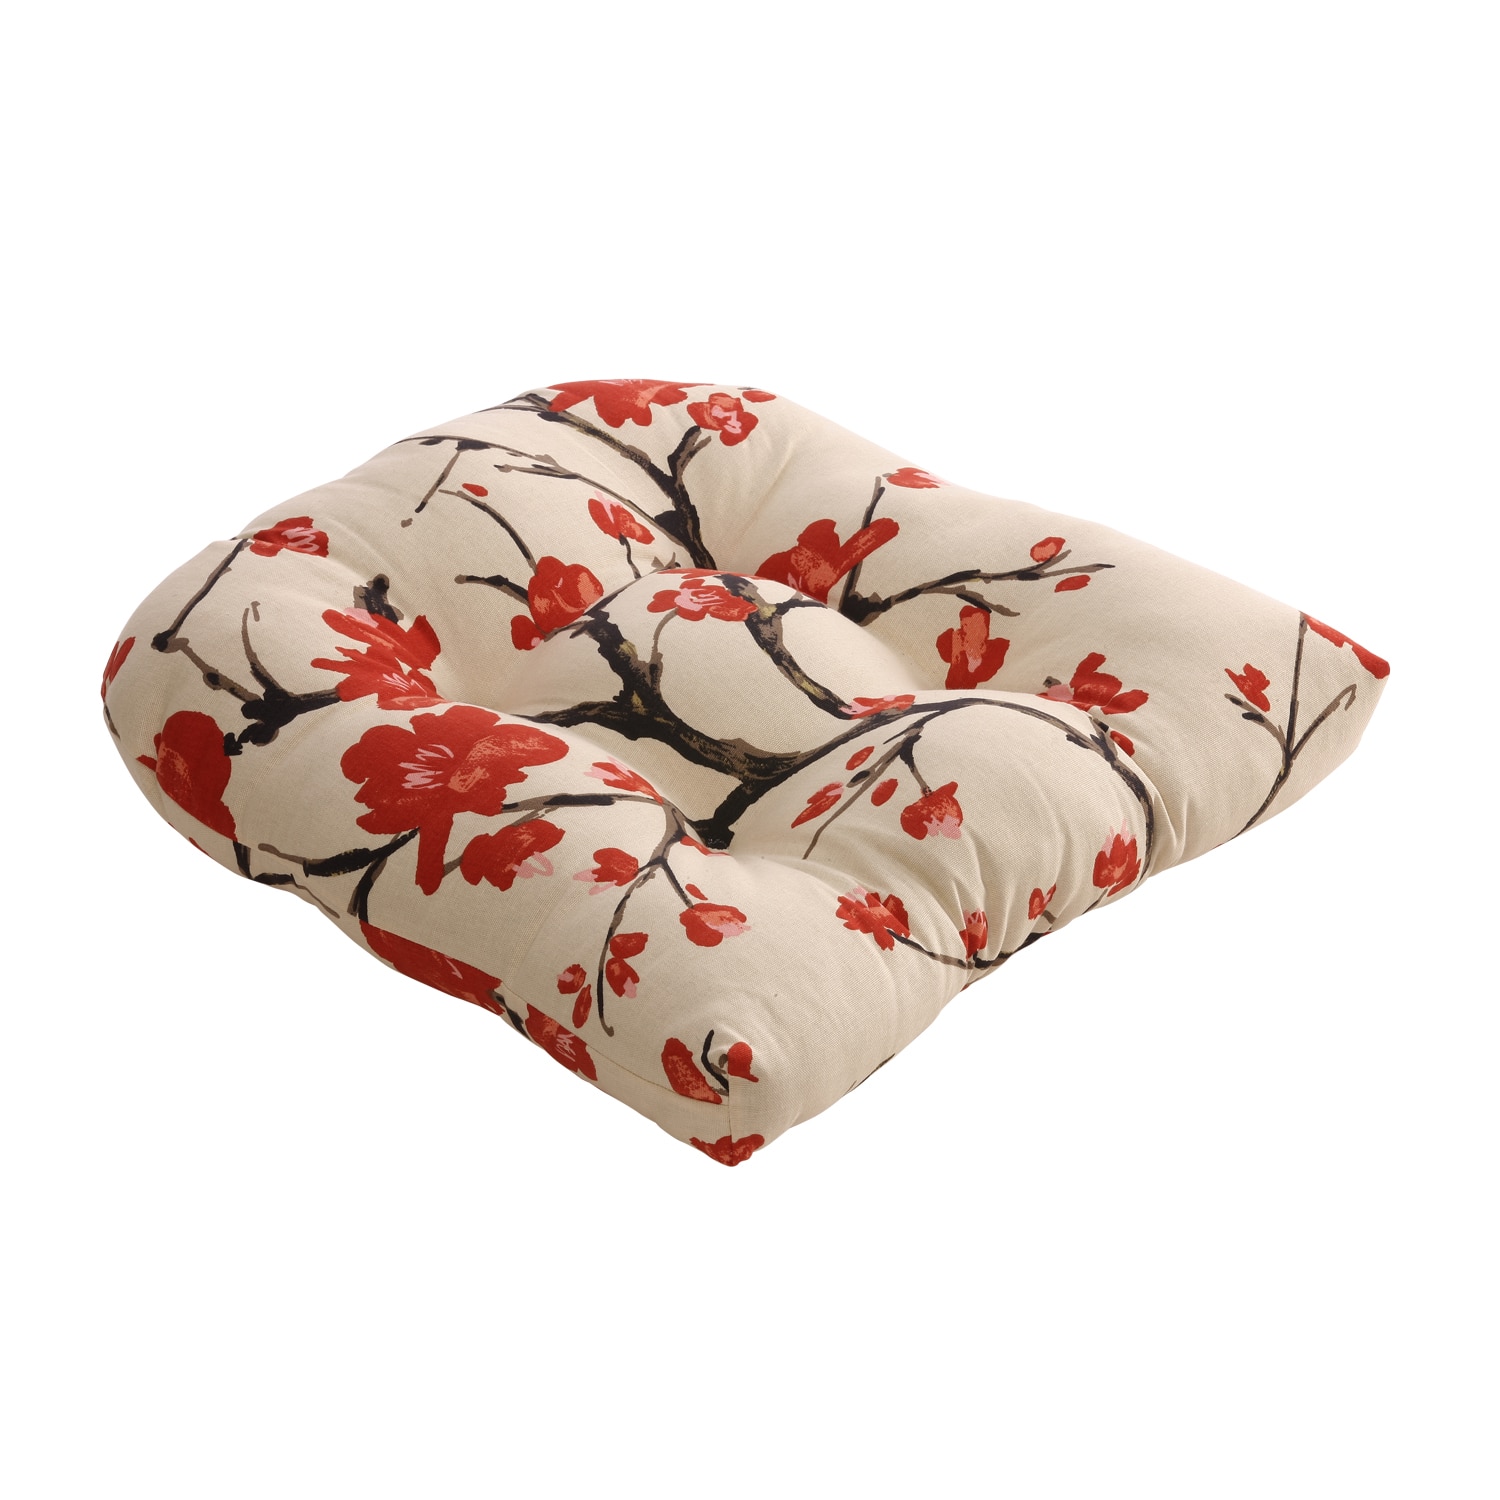 Beige/Red Flowering Branch Chair Cushion